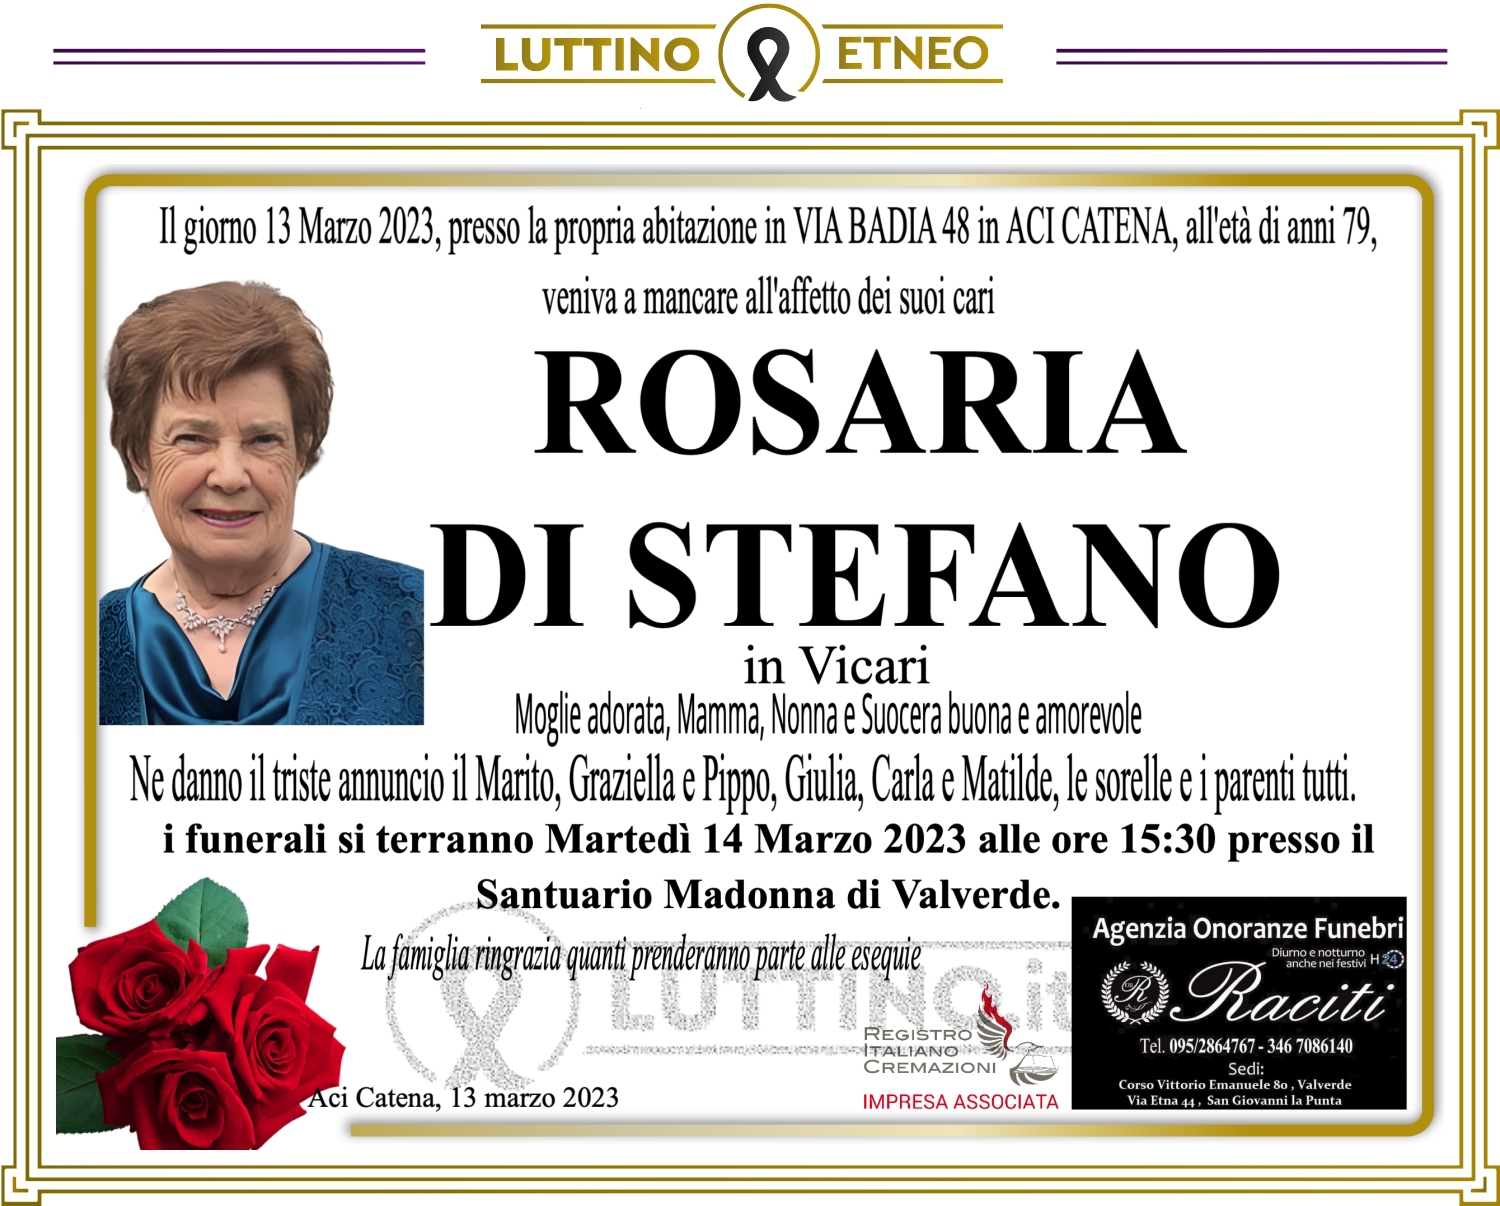 Rosaria Di Stefano